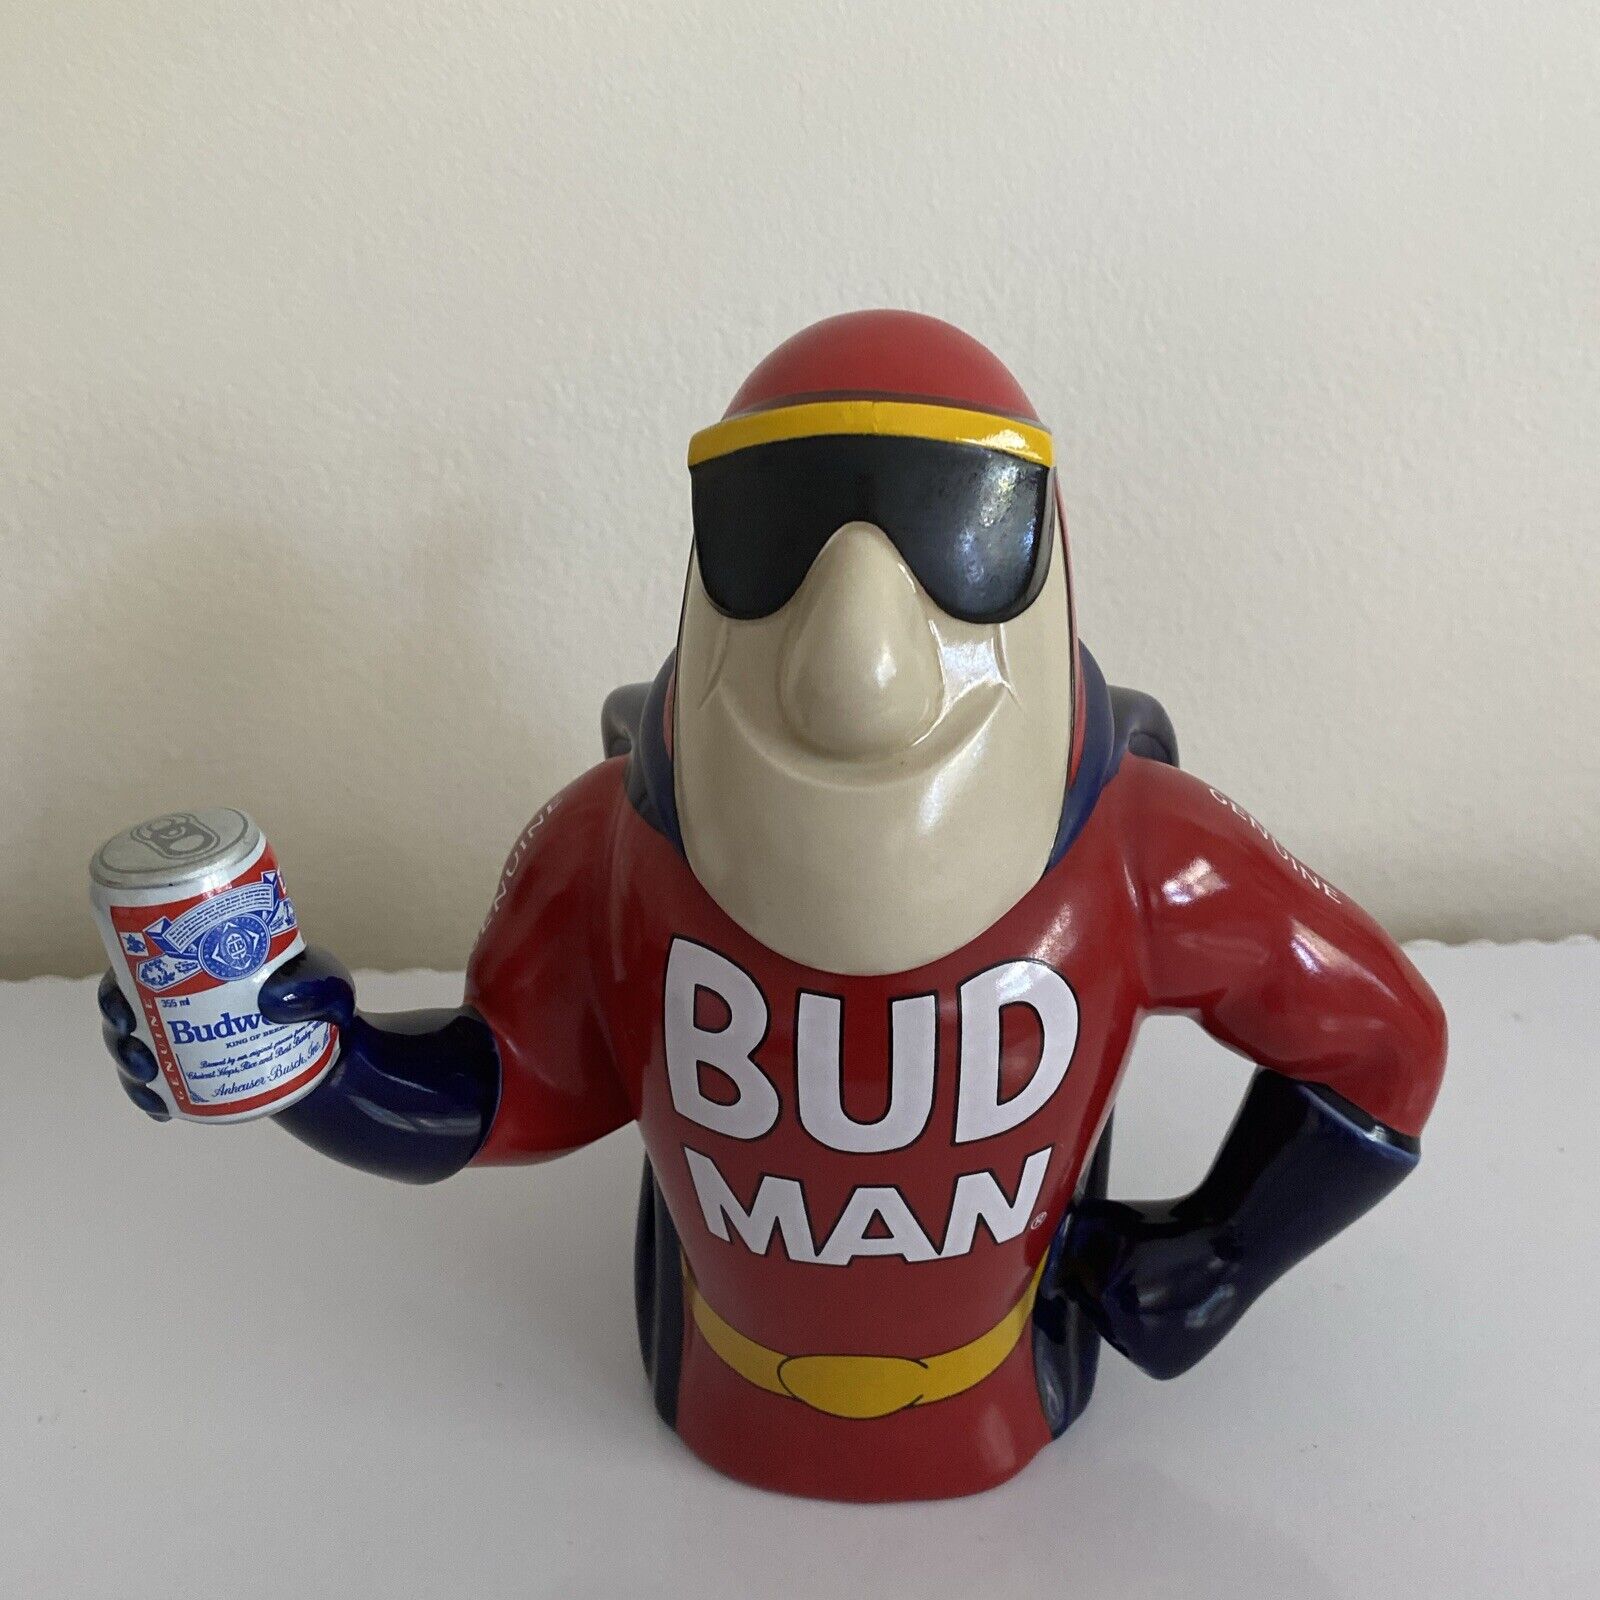 1993 Bud Man Stein                                                           sea